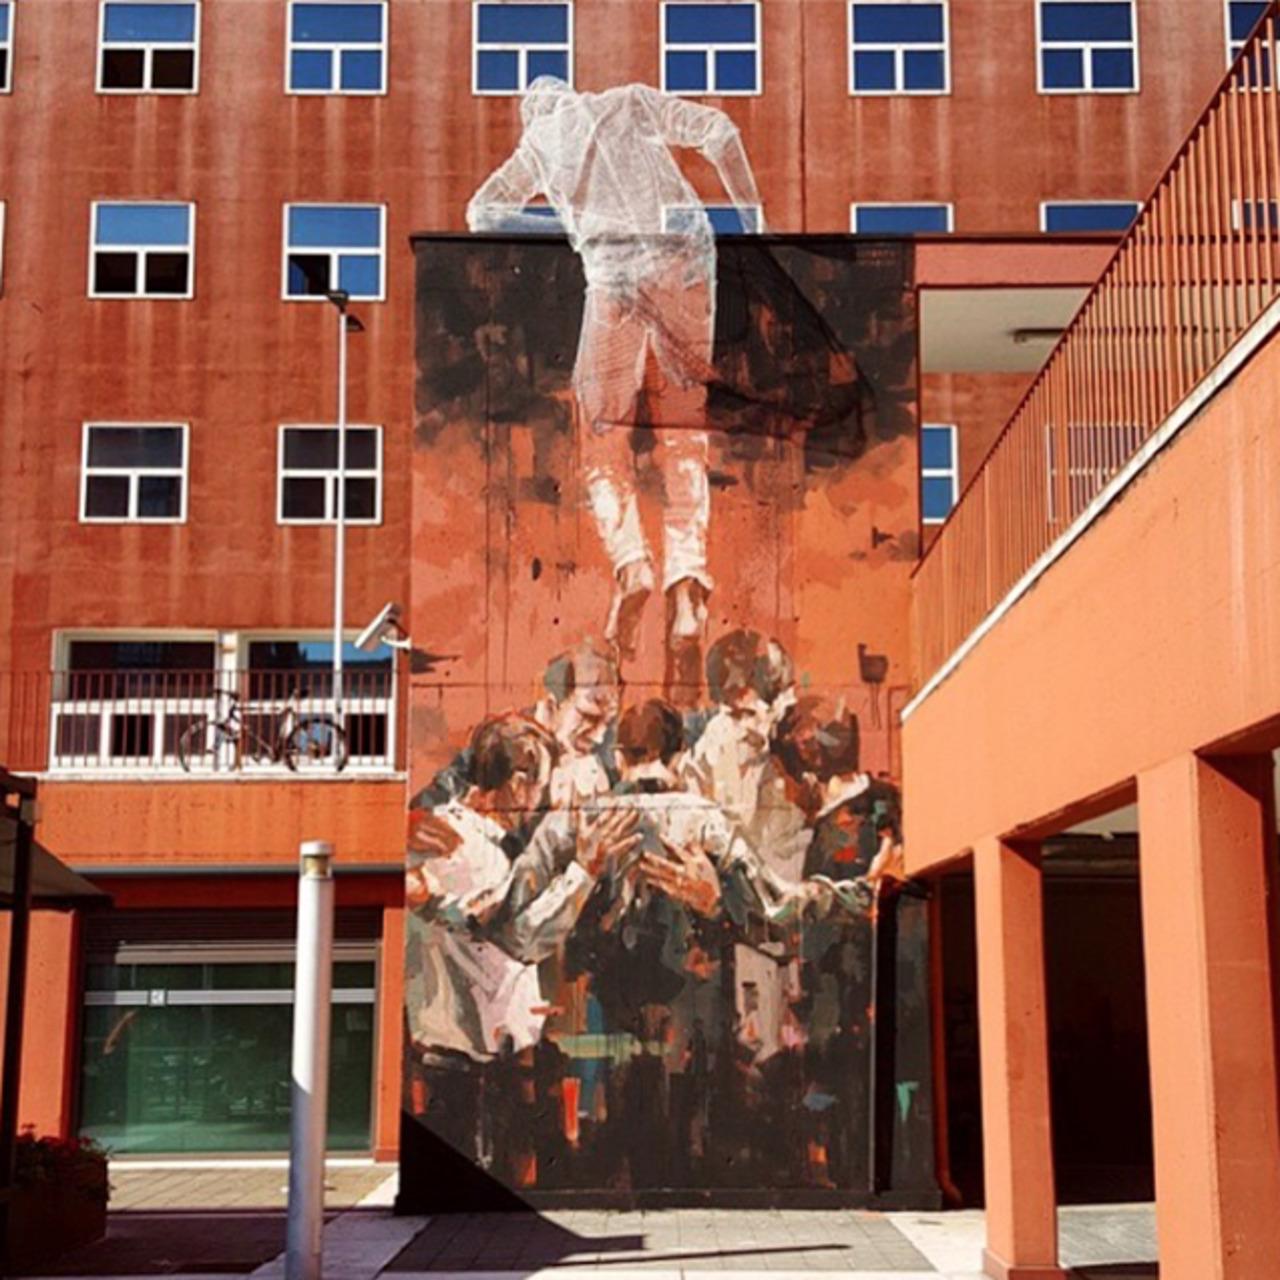 RT @streetgalerie: New mural by Borondo and Edoardo Tresoldi / Milan, Italy #streetart #arturbain #graffiti #borondo #mural #fresque http://t.co/2cFlidieXV